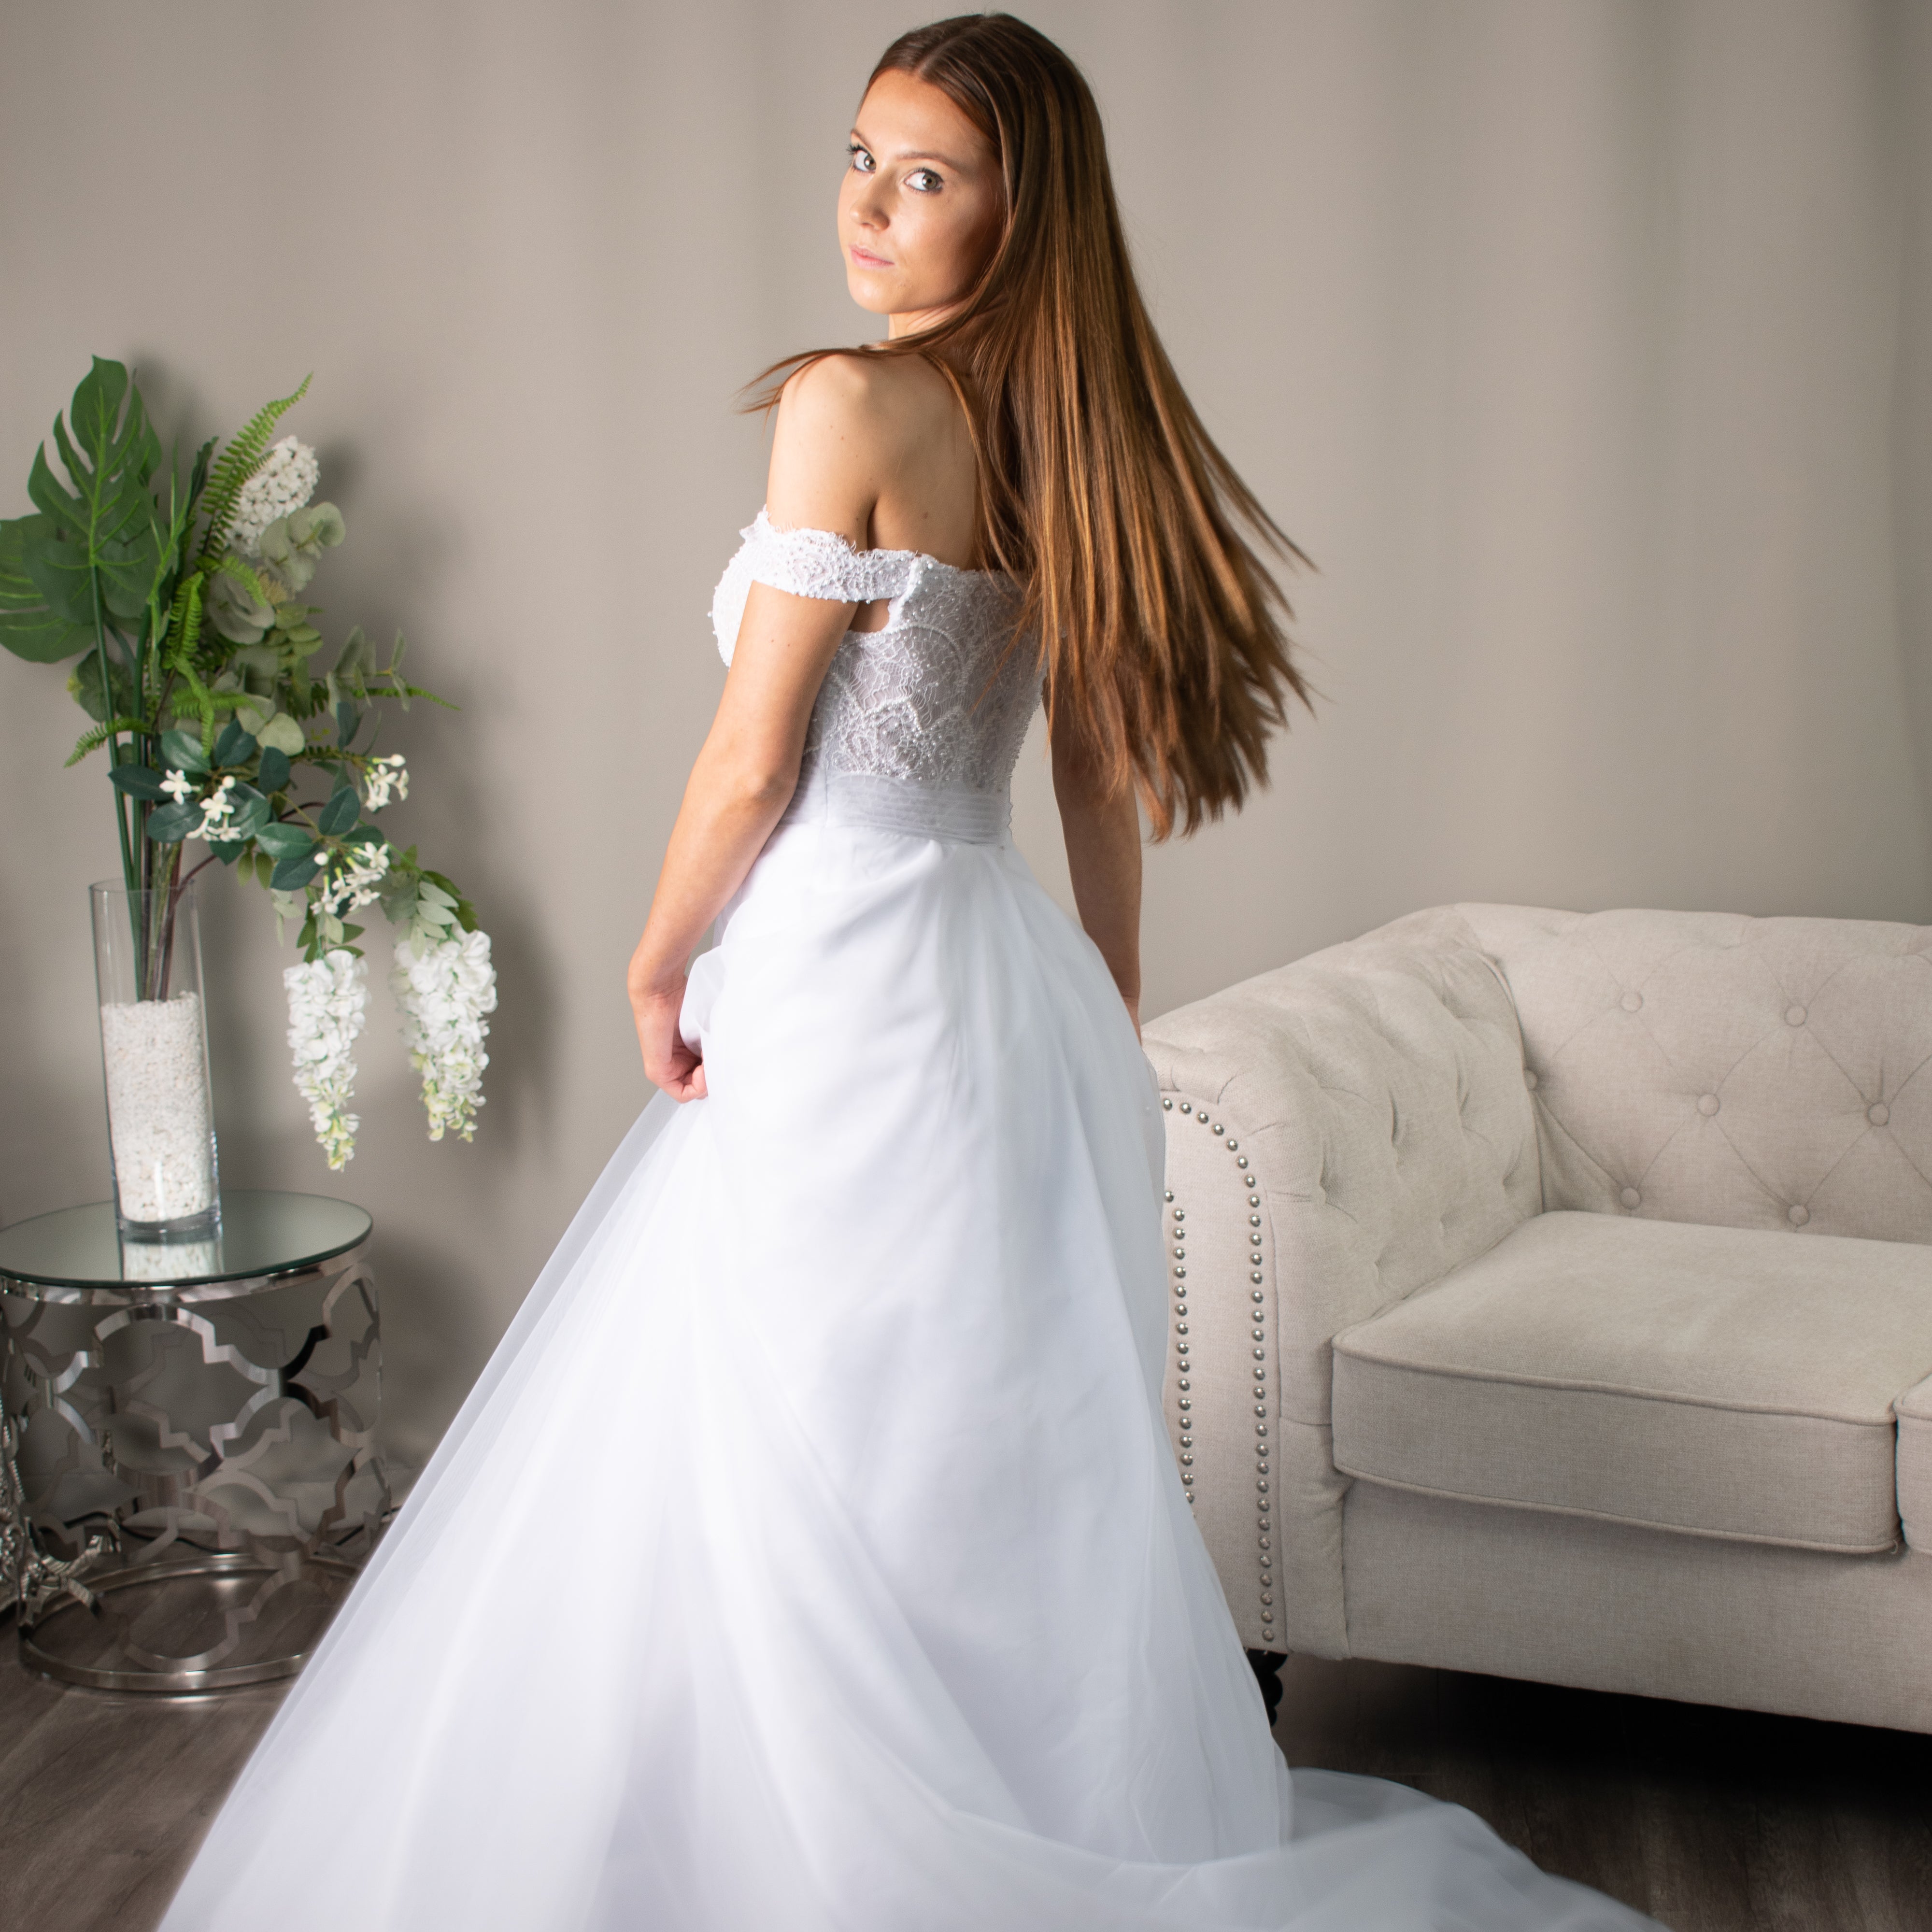 Top 30 Affordable Wedding Dress Shops in Melbourne, Victoria